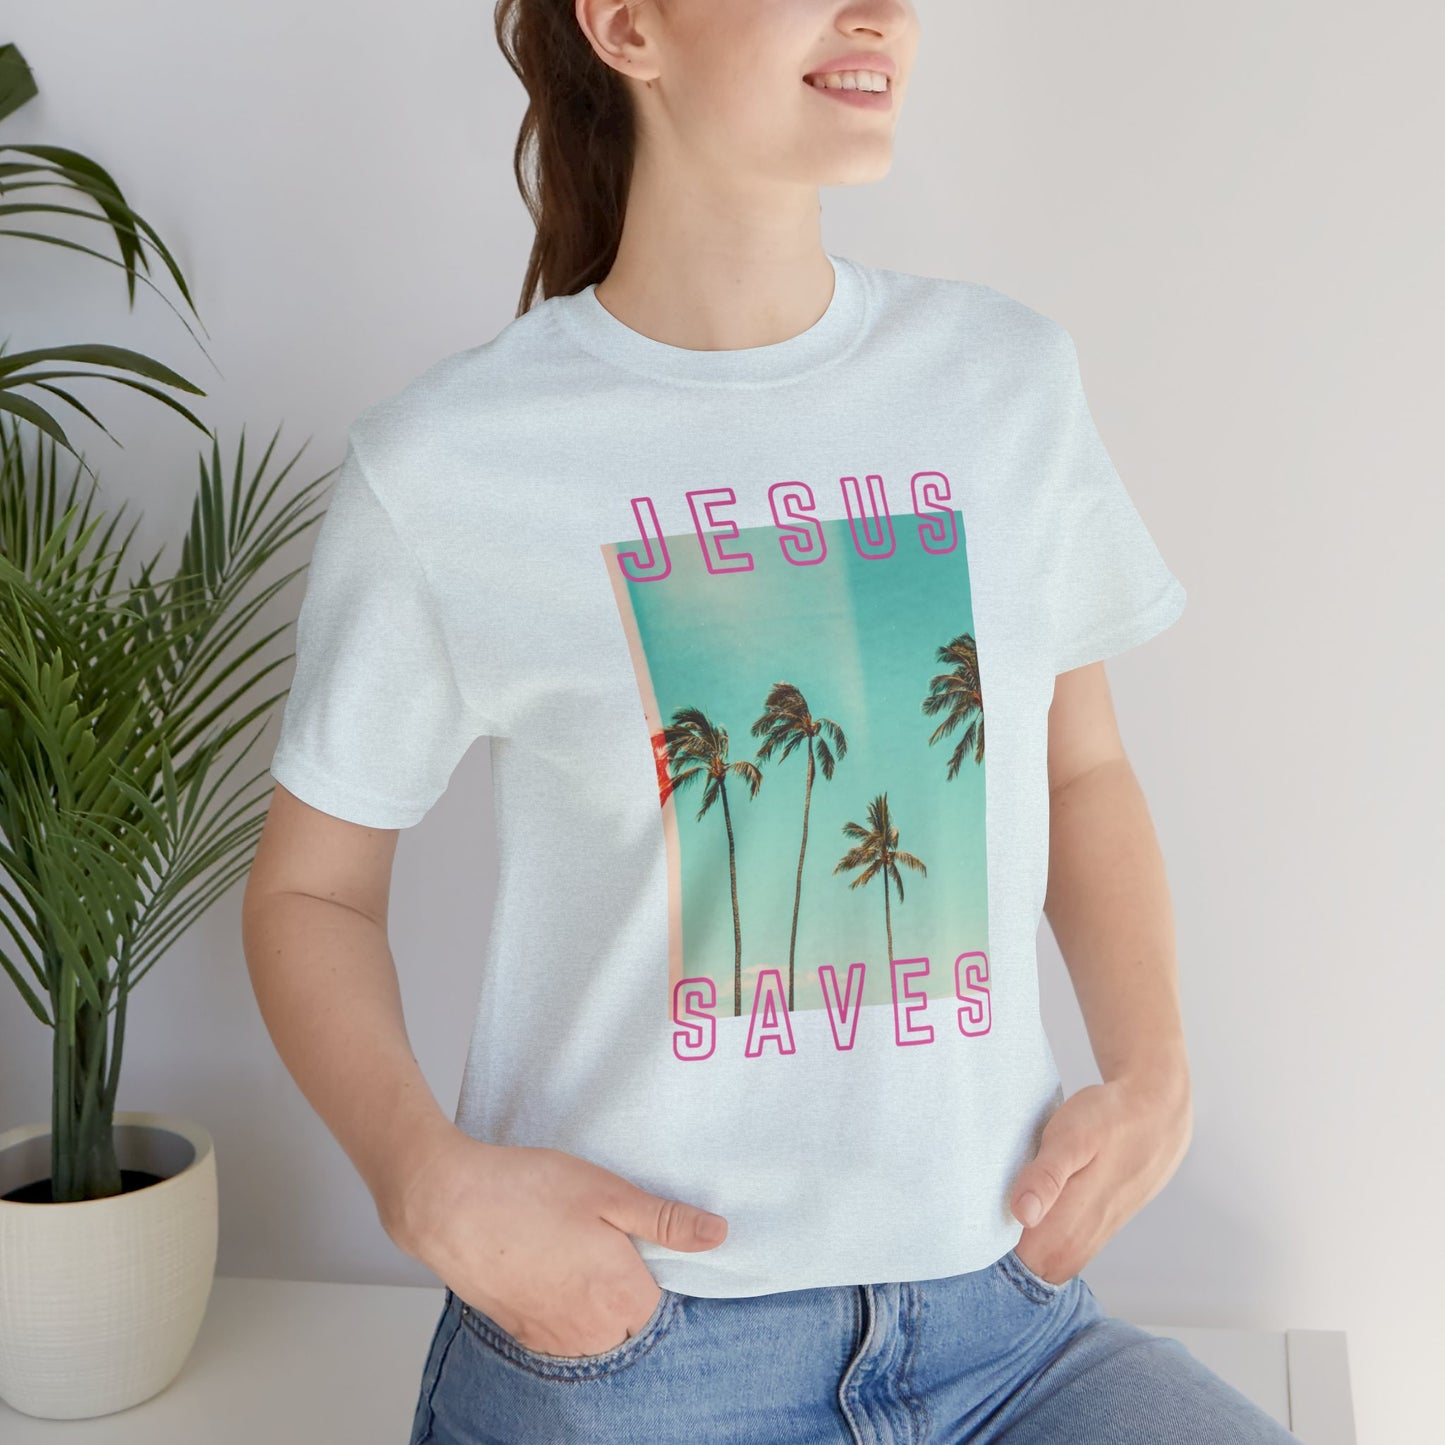 Cali Jesus Saves T-Shirt - LA Palm Tree Beach SoCal - Bright Color Tees